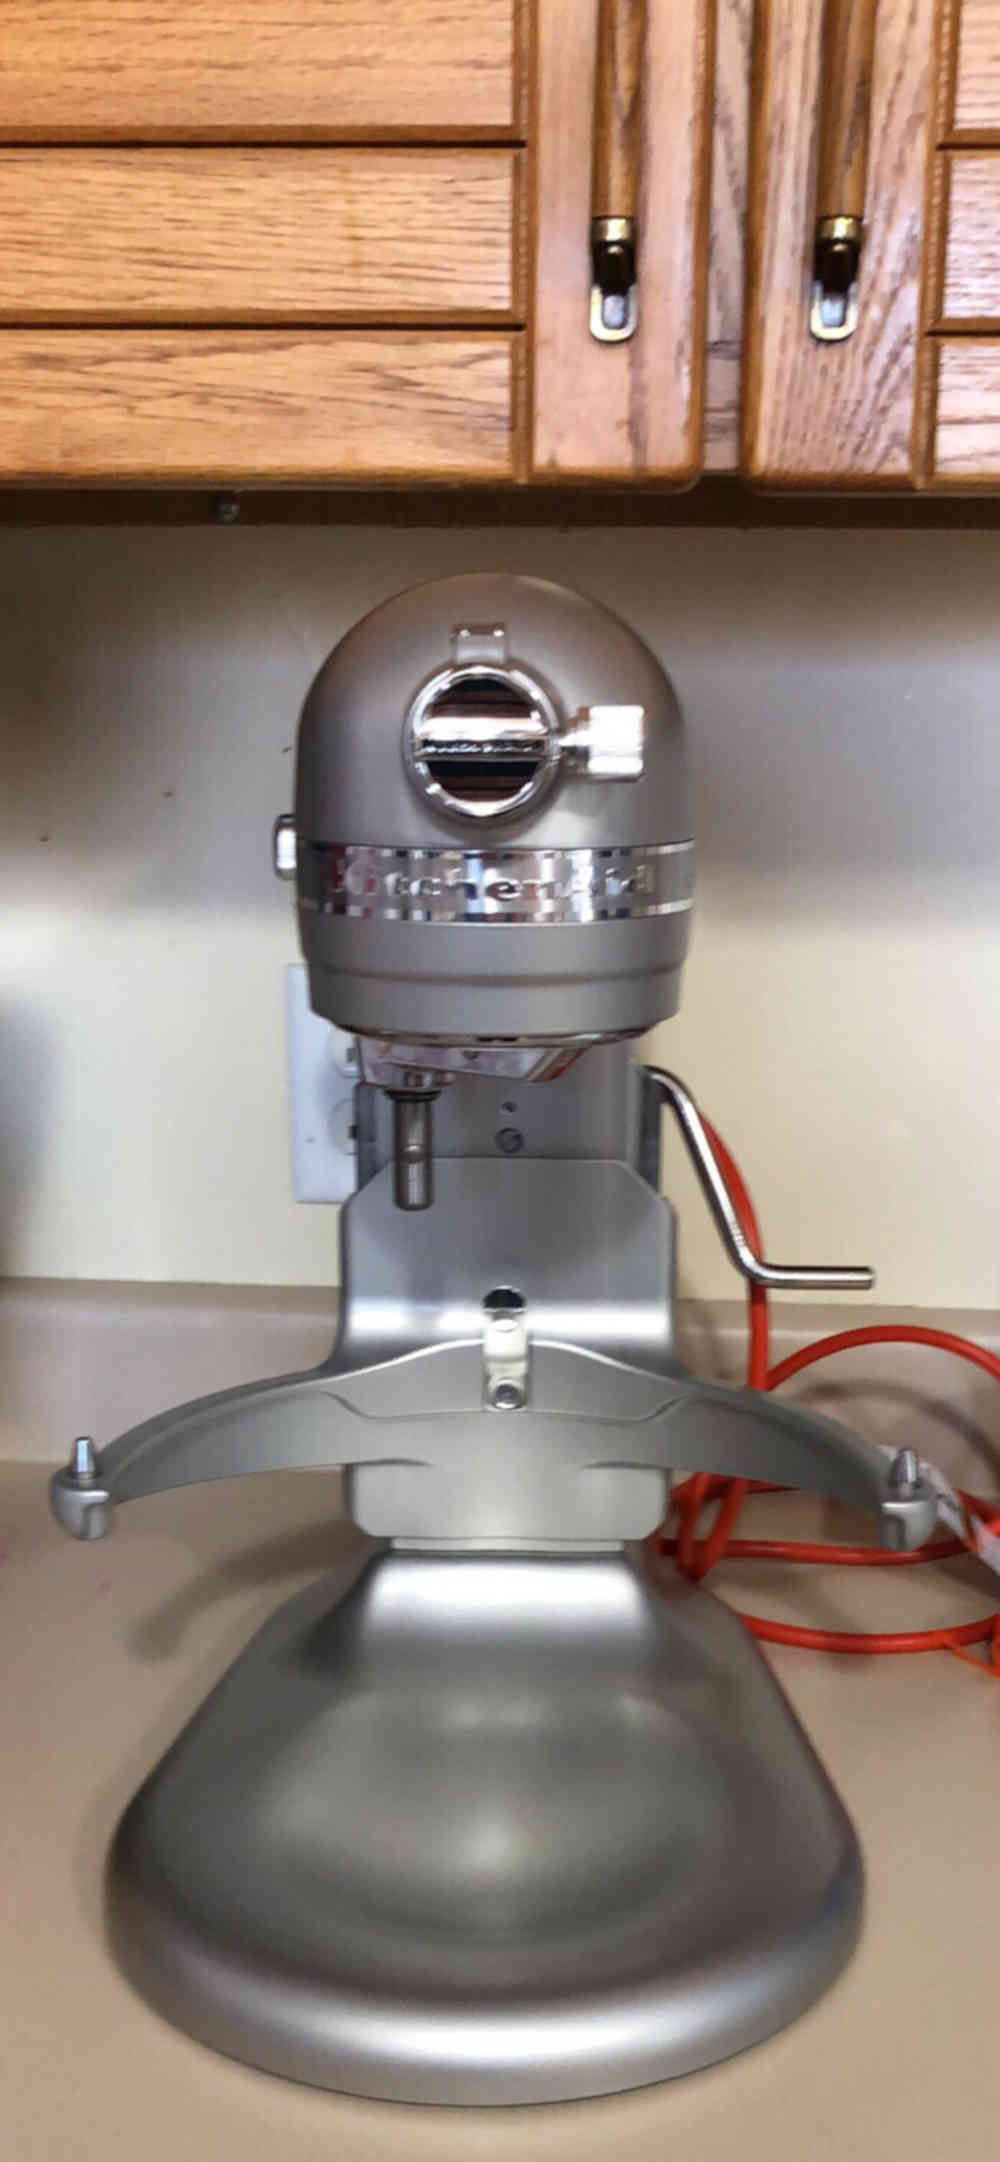 KitchenAid 8-Qt. Commercial Mixer, Machines